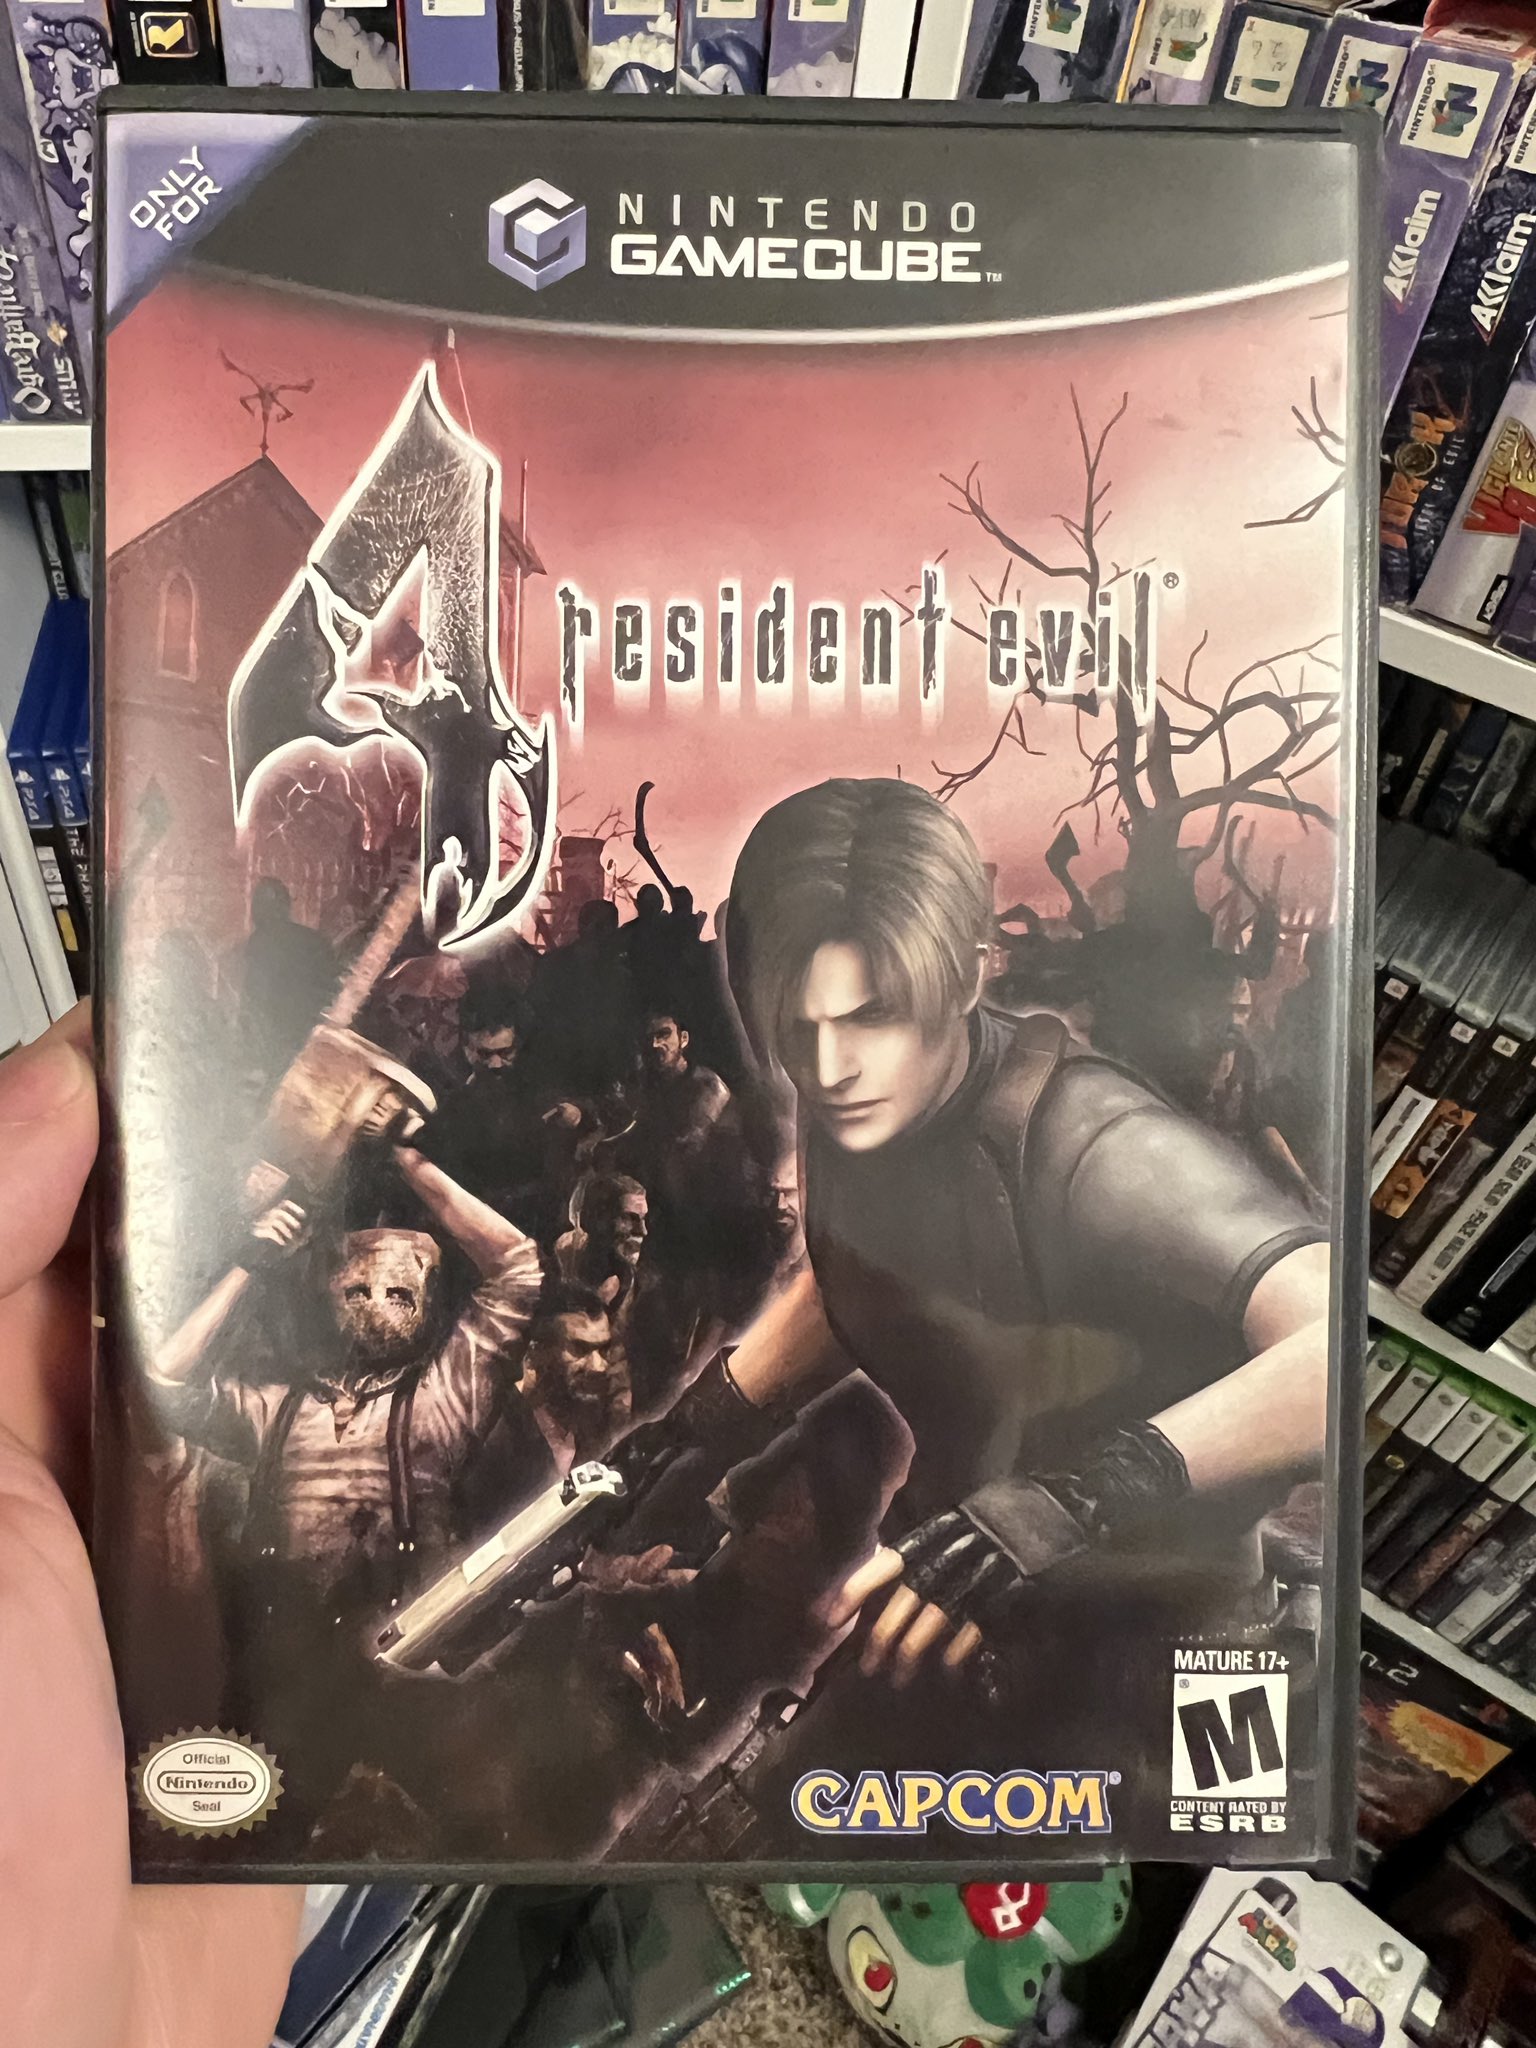 Resident Evil 4, Gamecube - Video Games - San Jose, California, Facebook  Marketplace